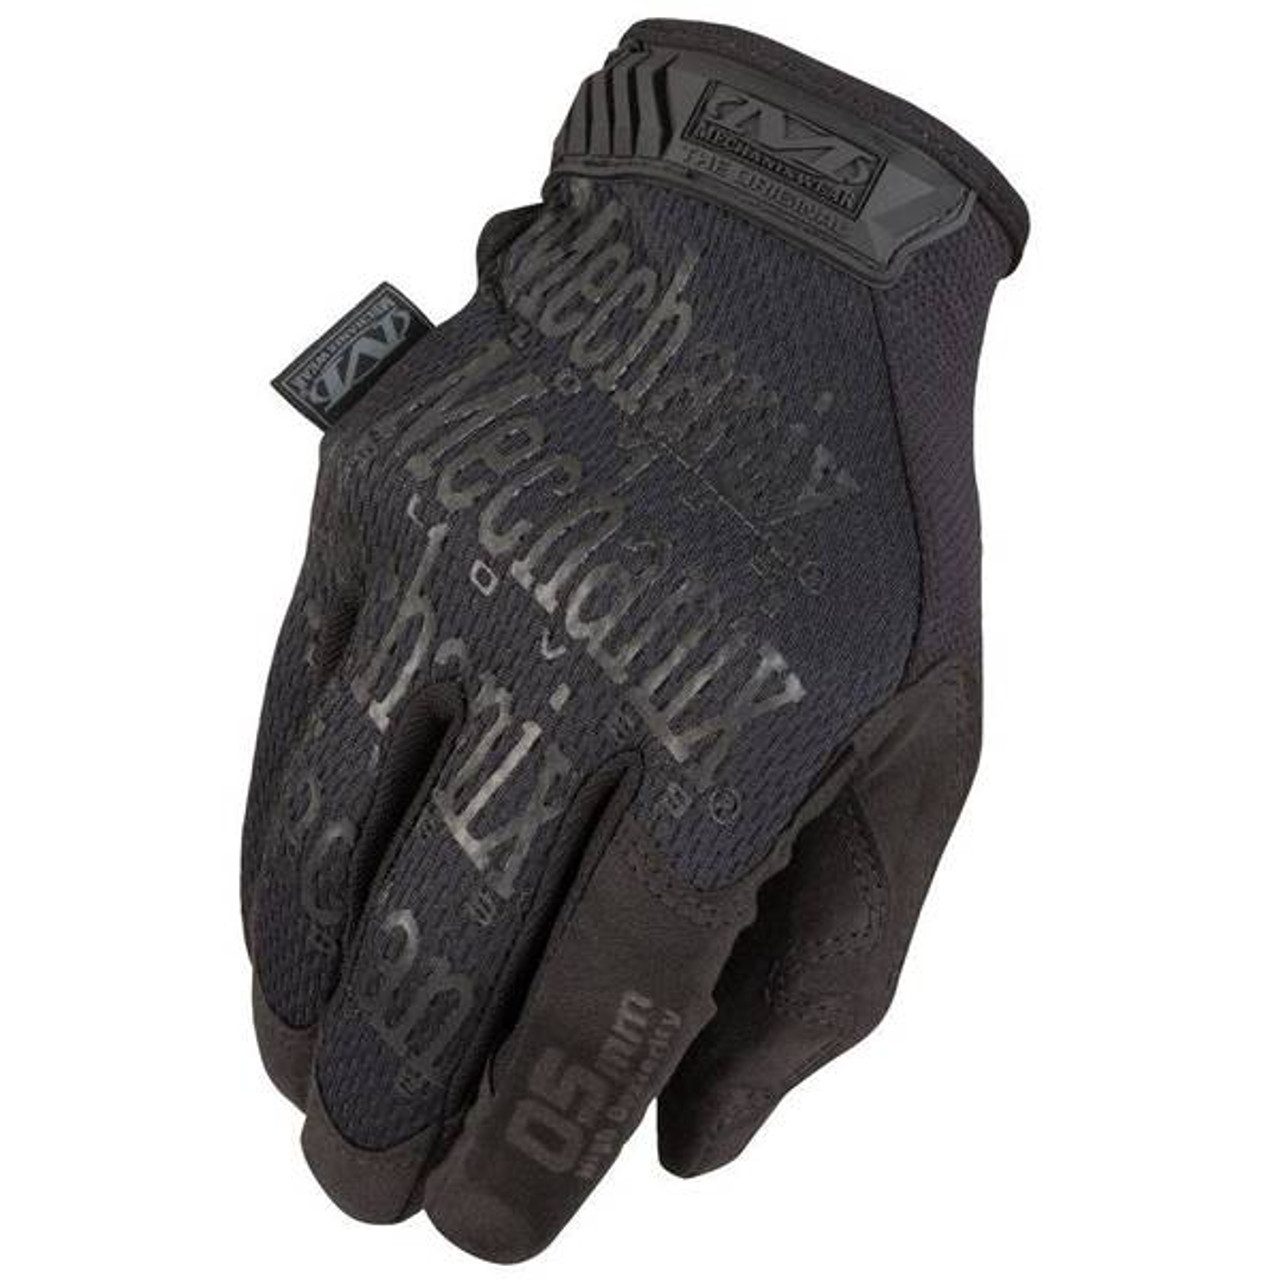  Mechanix Wear: Tactical Specialty 0.5mm High-Dexterity Work  Gloves